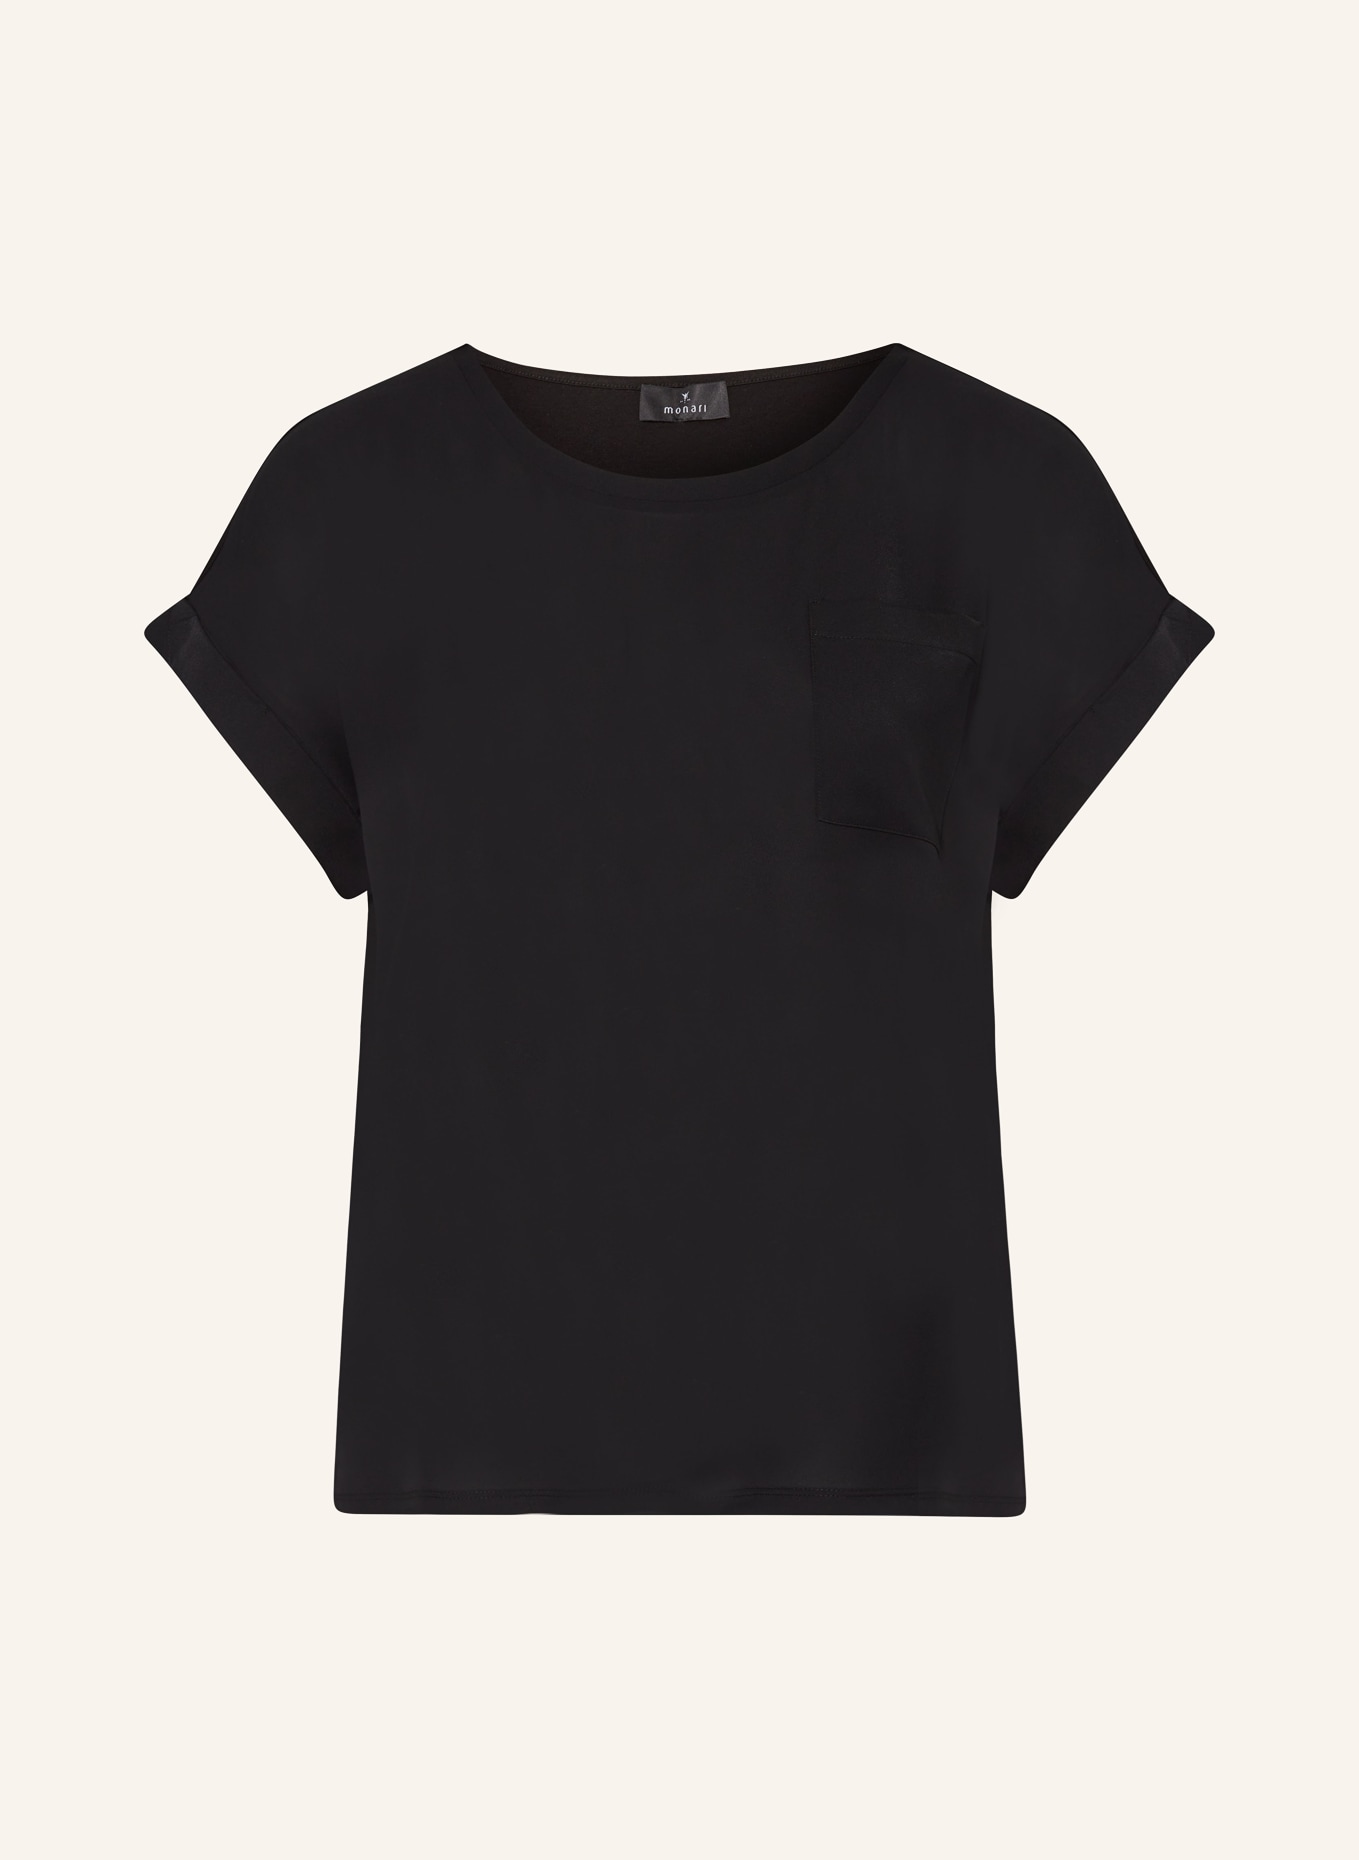 monari T-Shirt im Materialmix, Farbe: SCHWARZ (Bild 1)